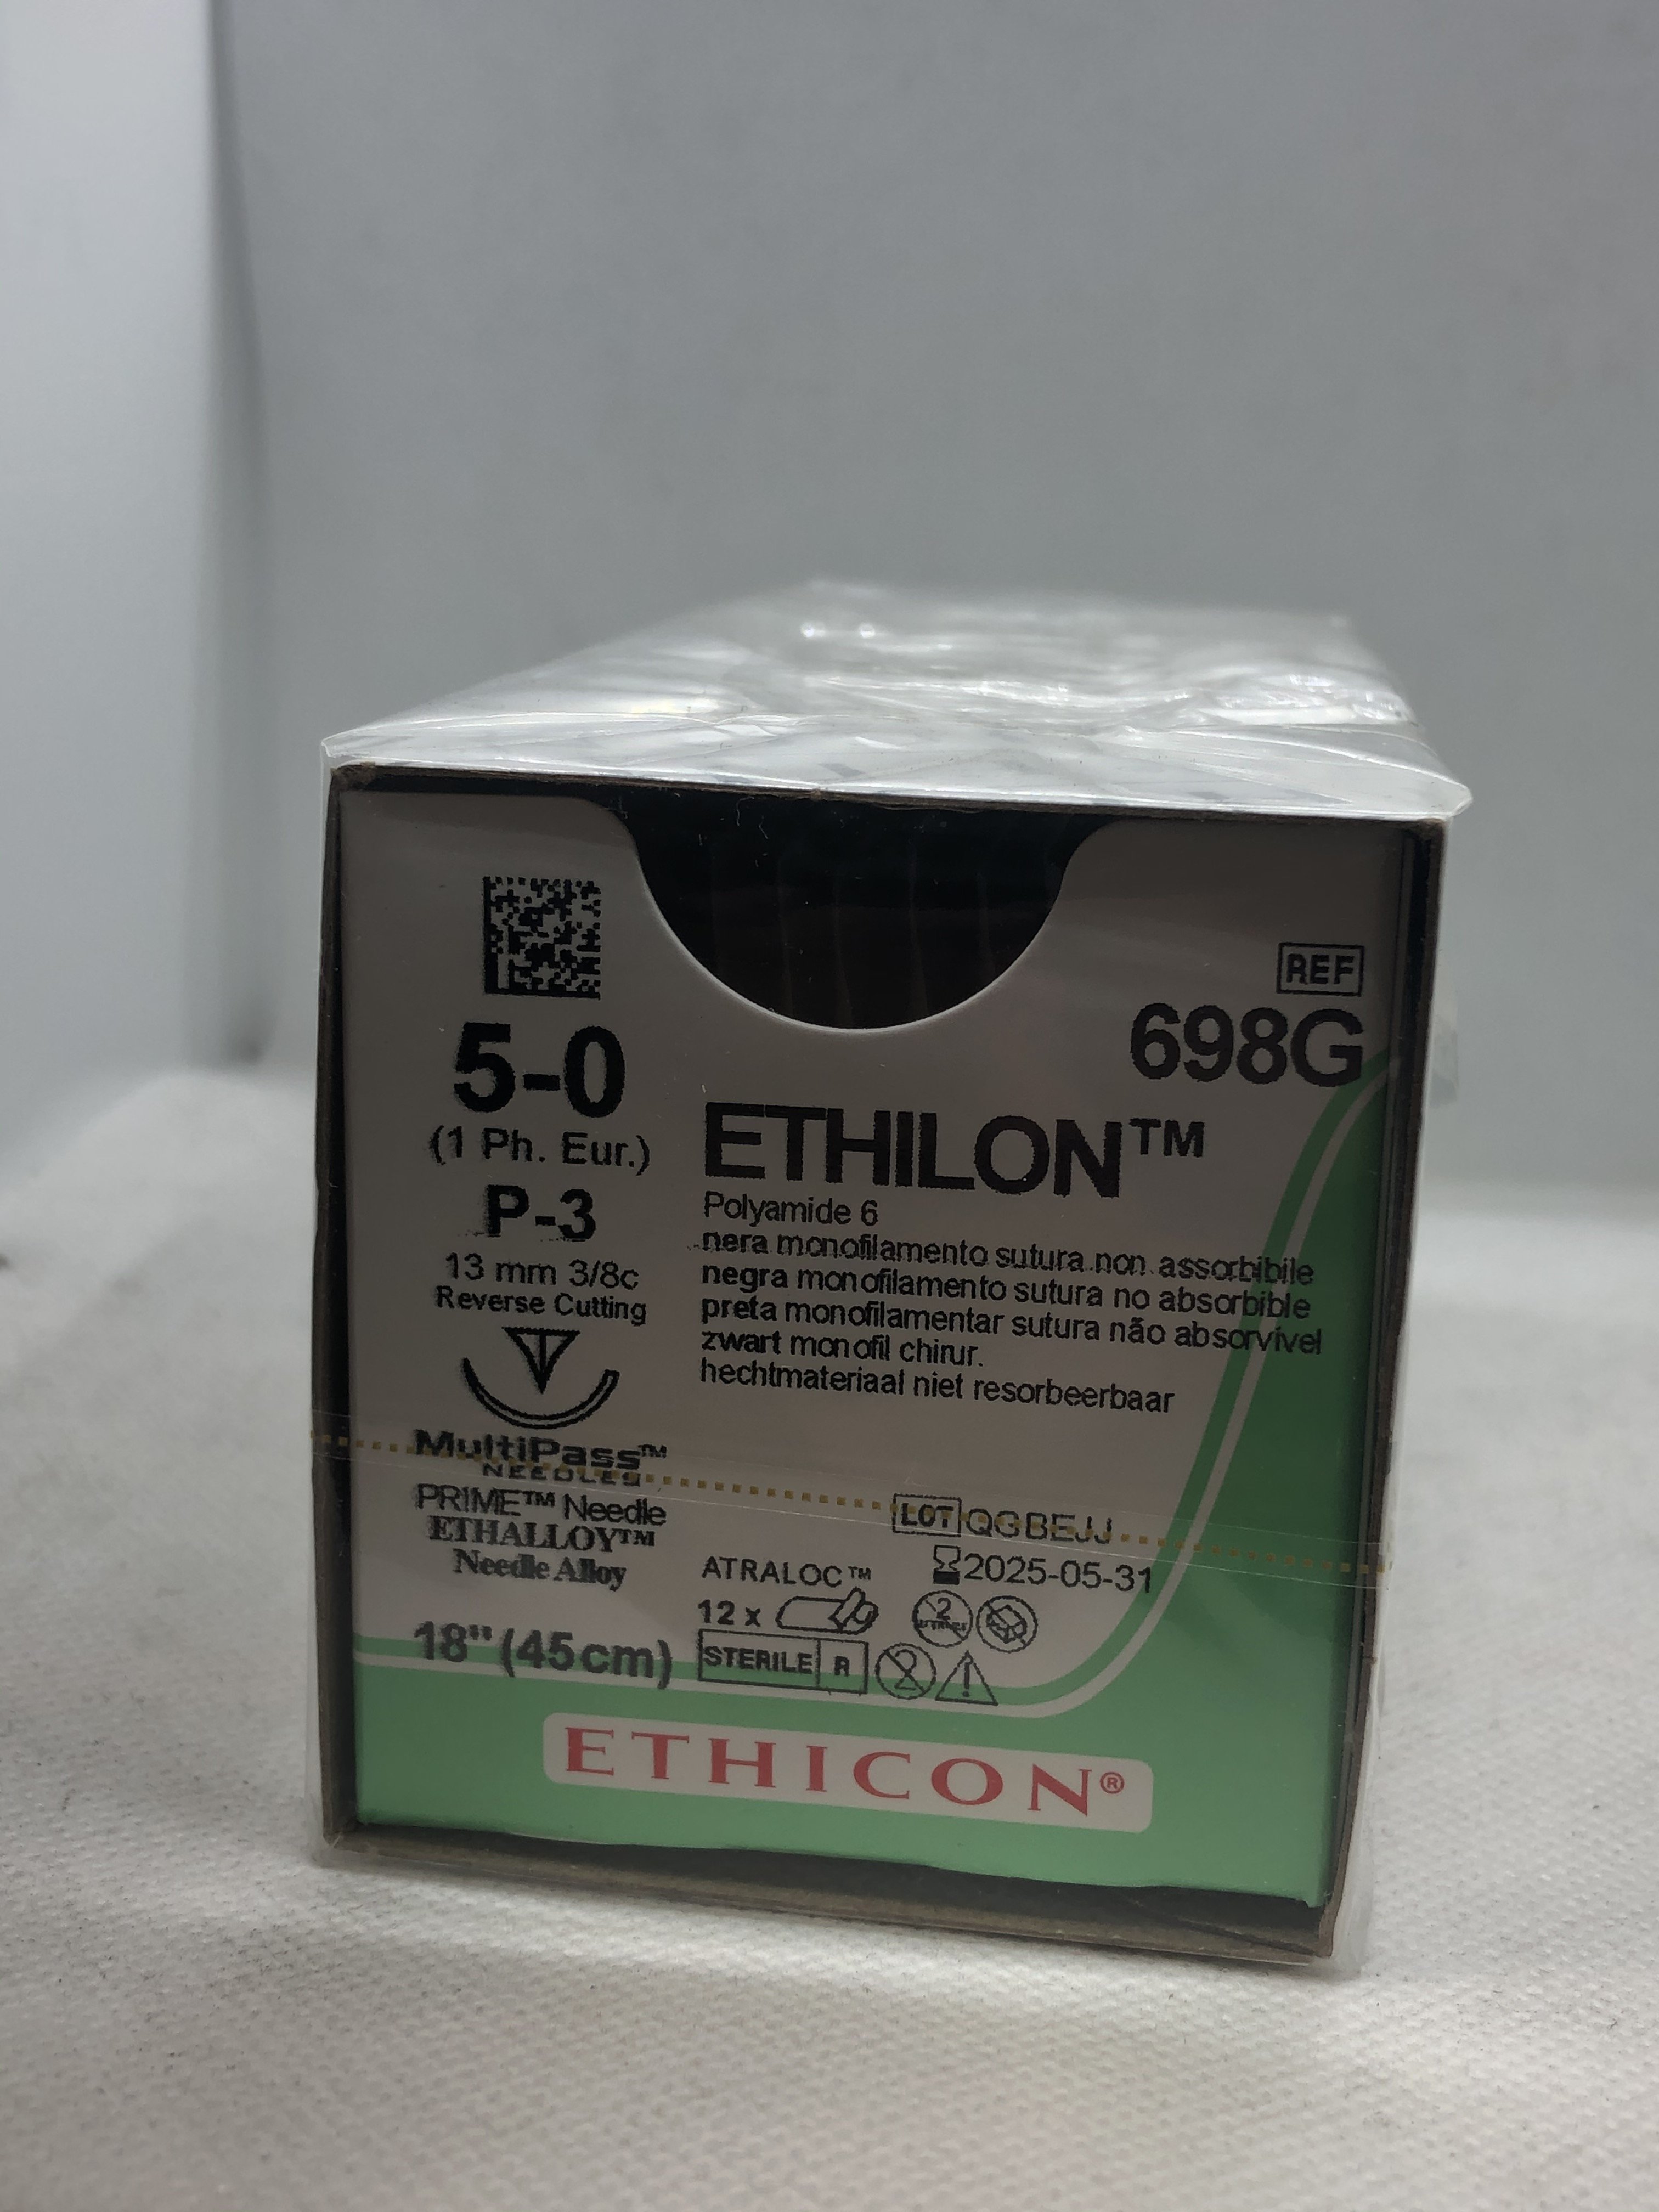 ETHICON ETHILON NYLON SUTURE 5/0 P-3 13MM 3/8C 45CM, 12